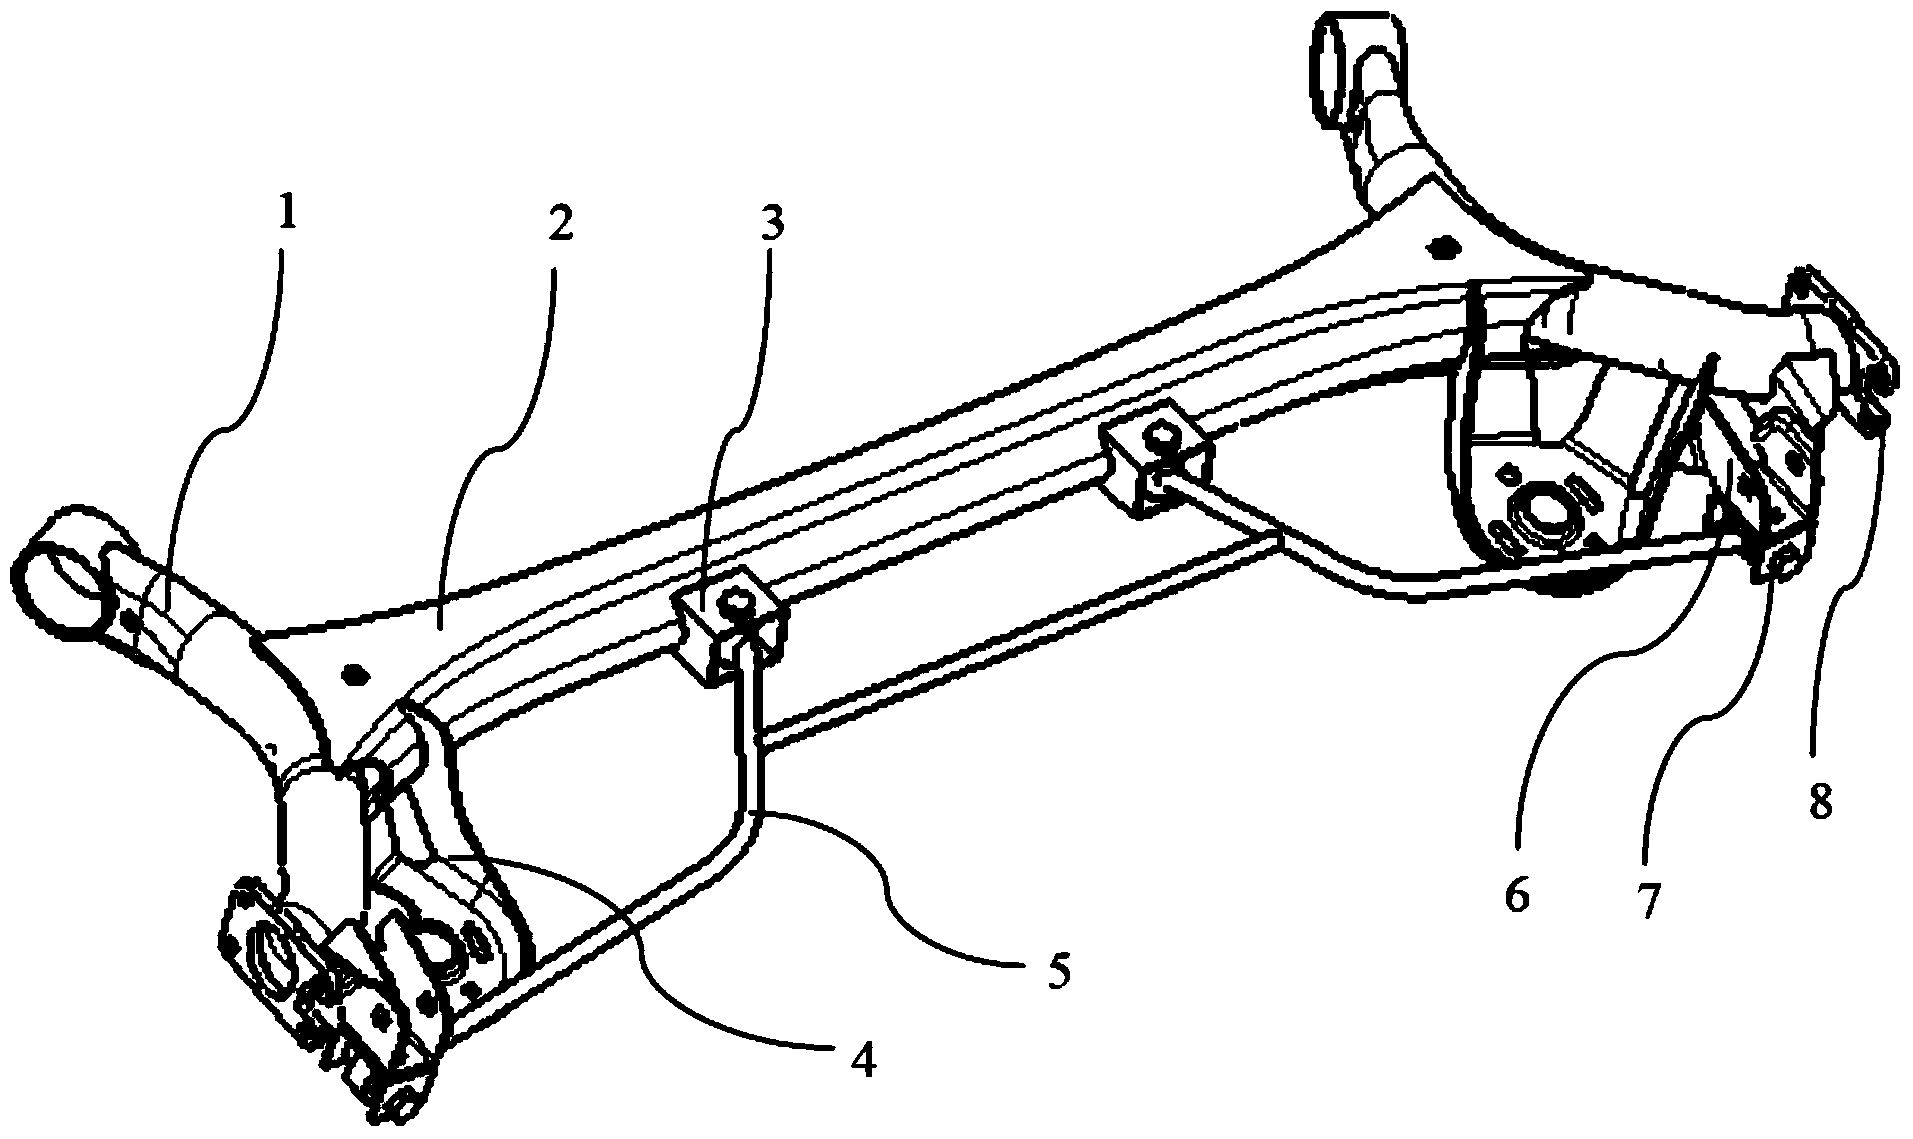 Automobile torsion beam suspension frame